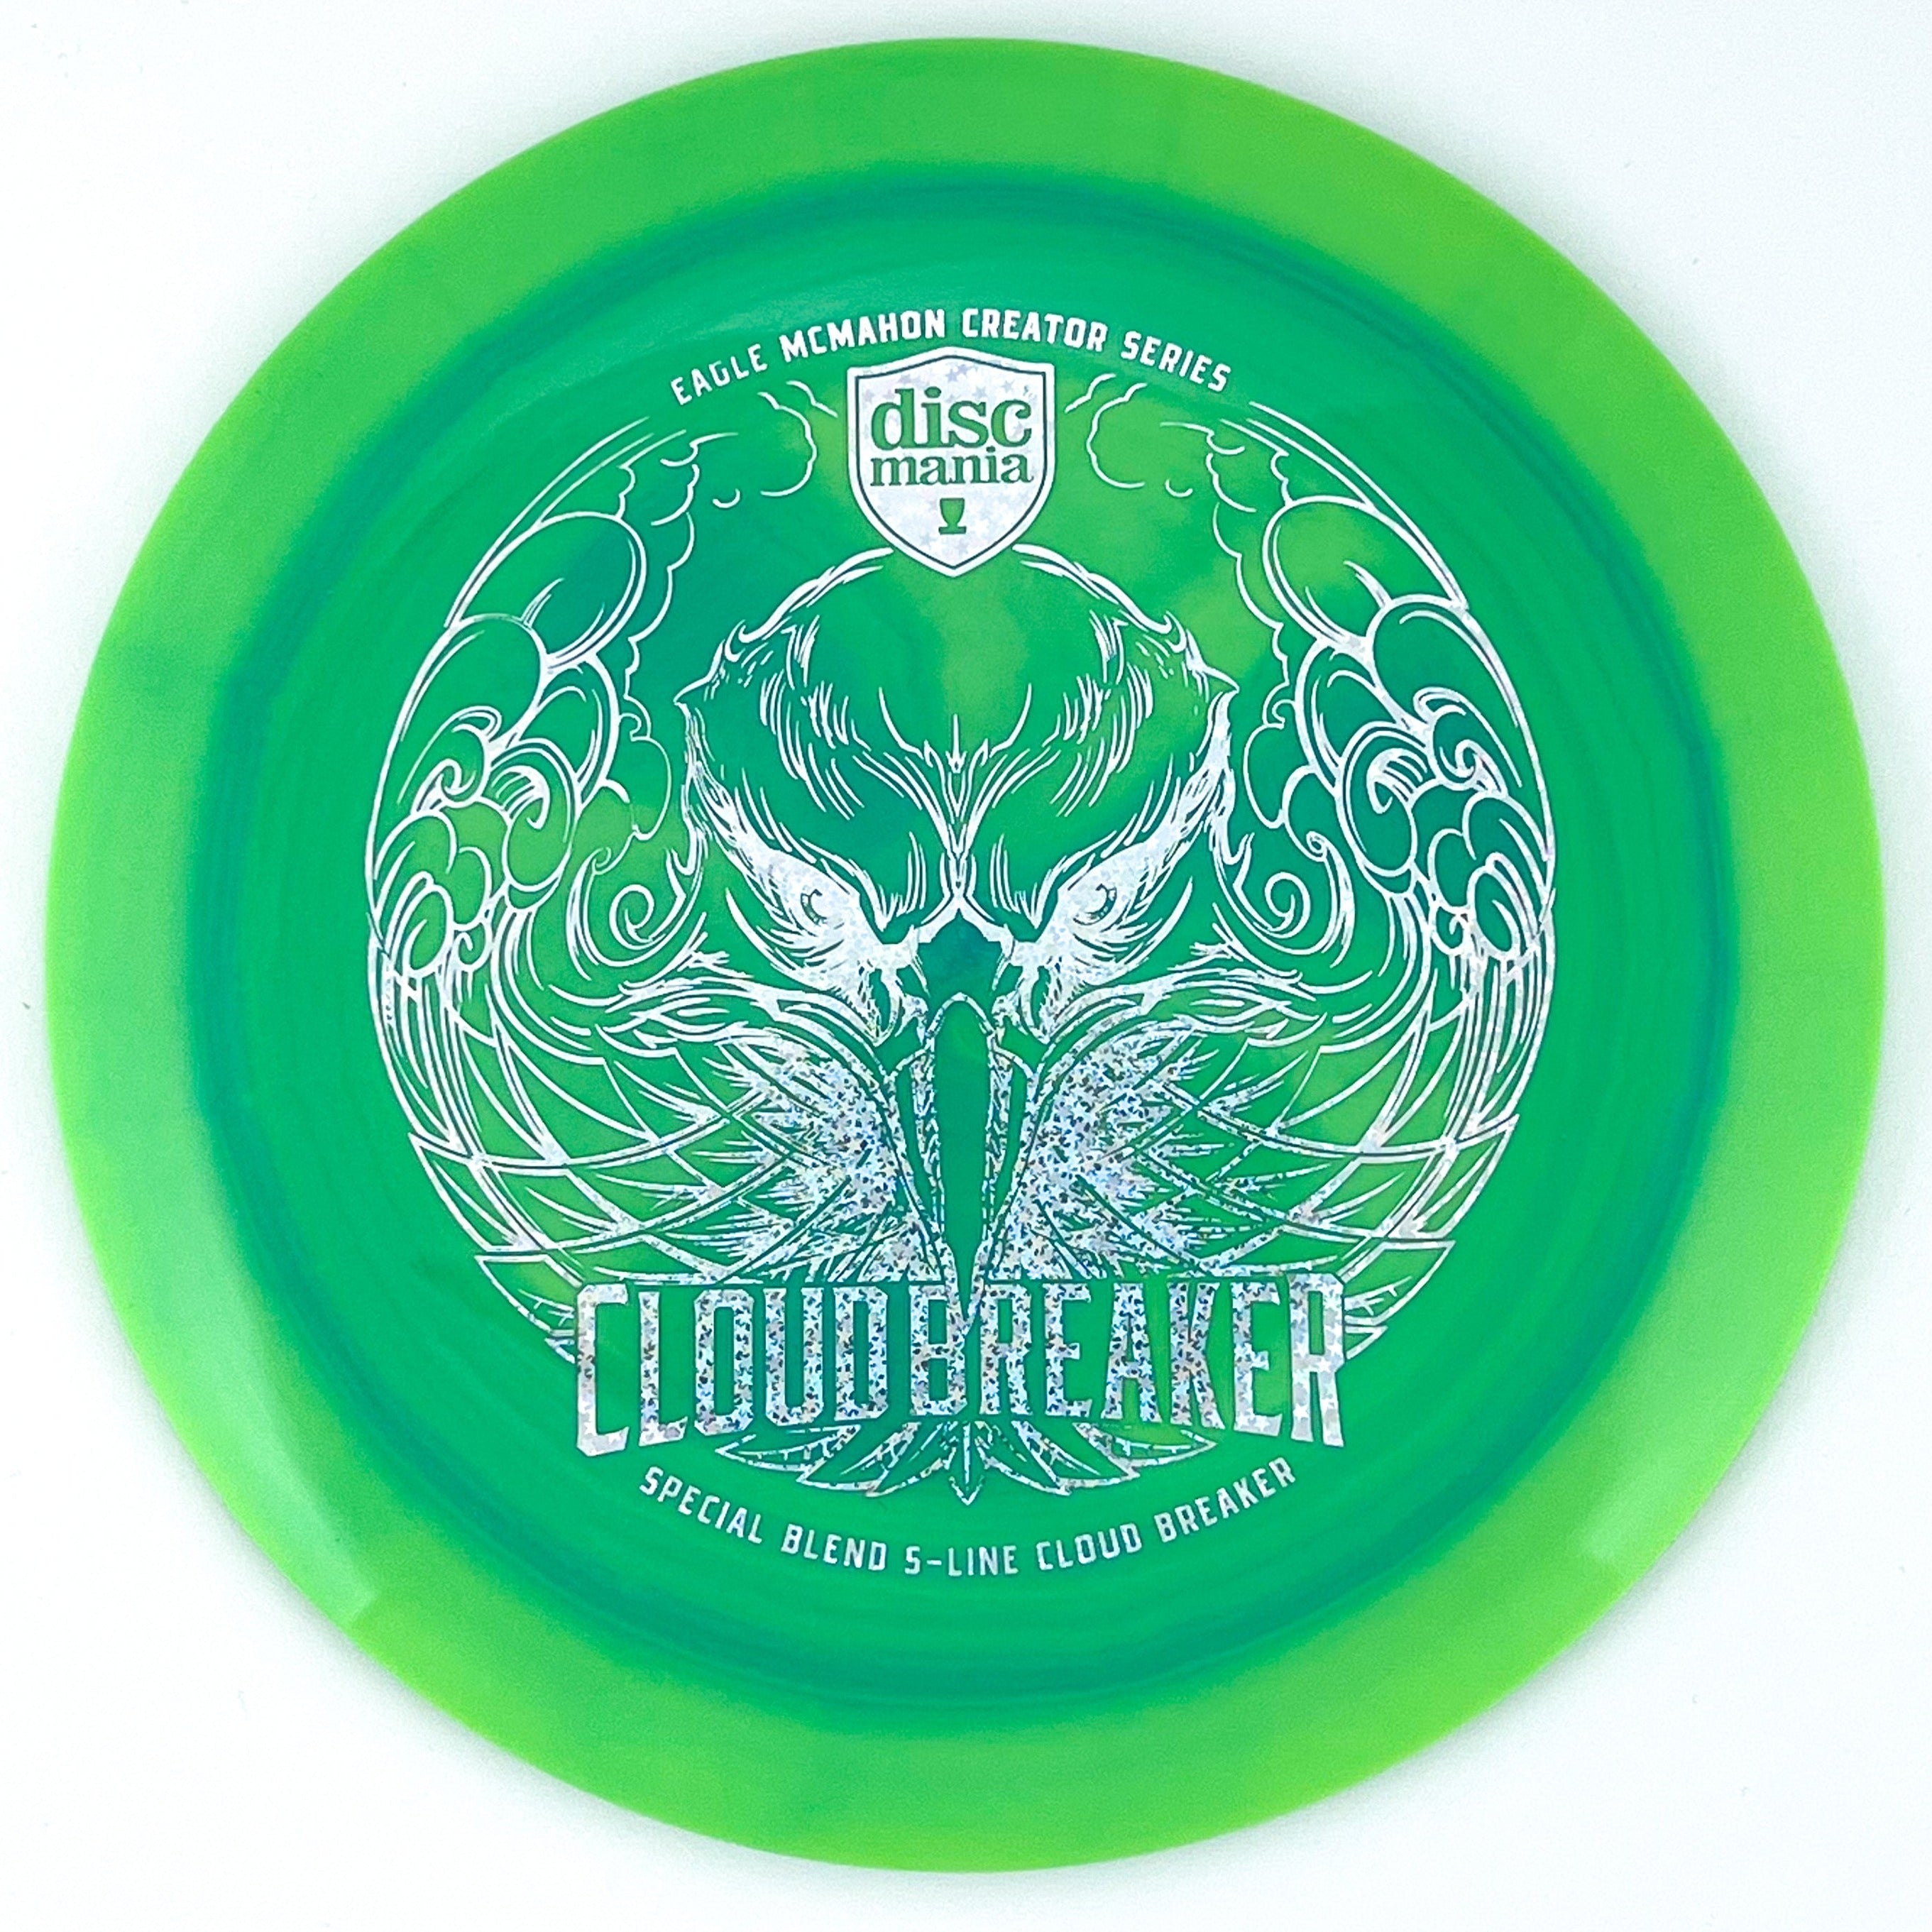 Green Teal Eagle McMahon Creator Series Cloud Breaker disc golf distance driver by Discmania Golf Discs.